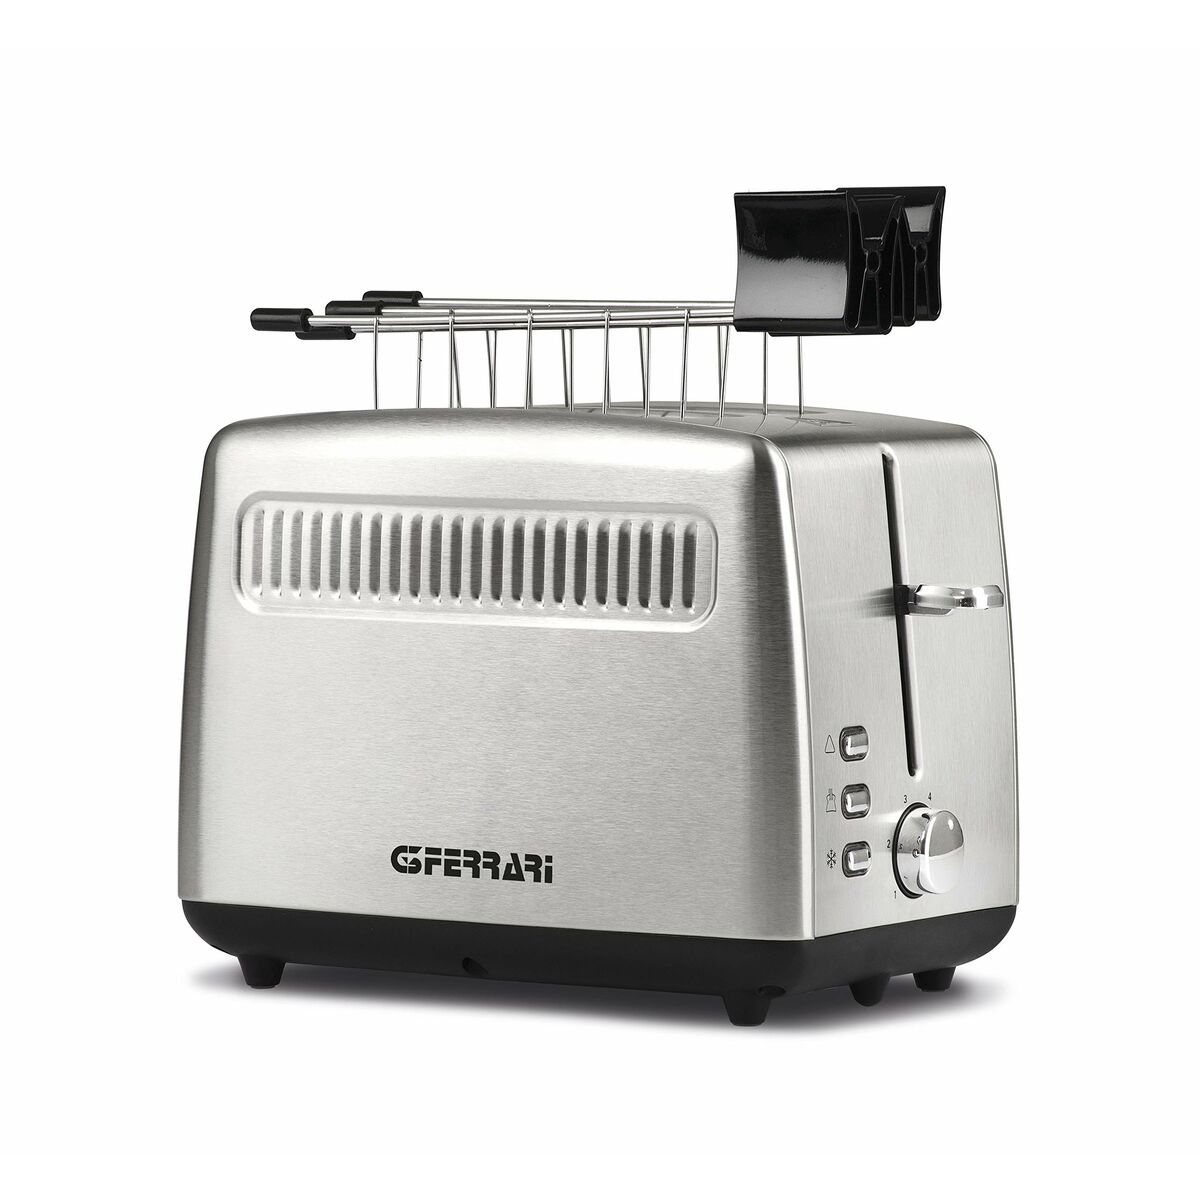 Toaster G3Ferrari G10064 770-920 W Edelstahl - CA International 